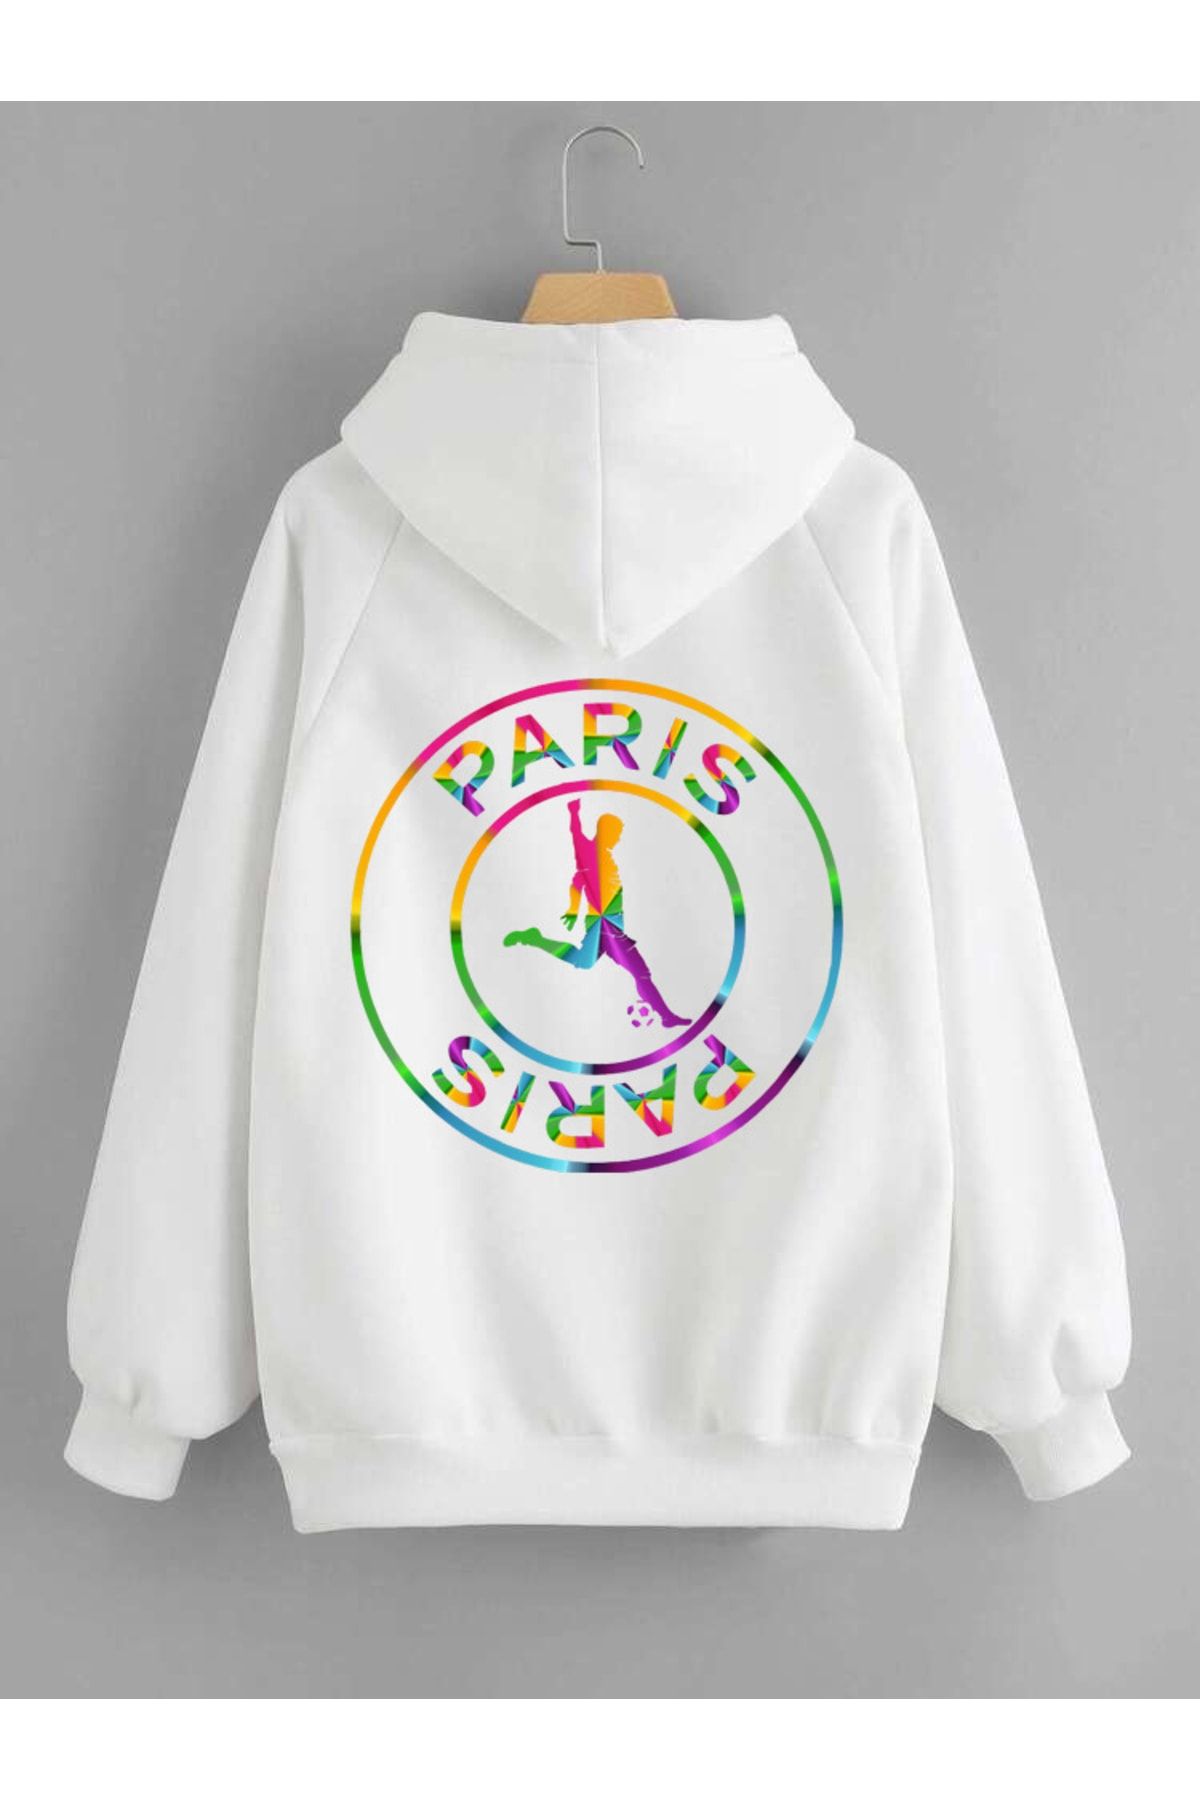 Relax family xf Erkek Kapüşonlu Sweatshirt Renkli Paris Baskı Beyaz